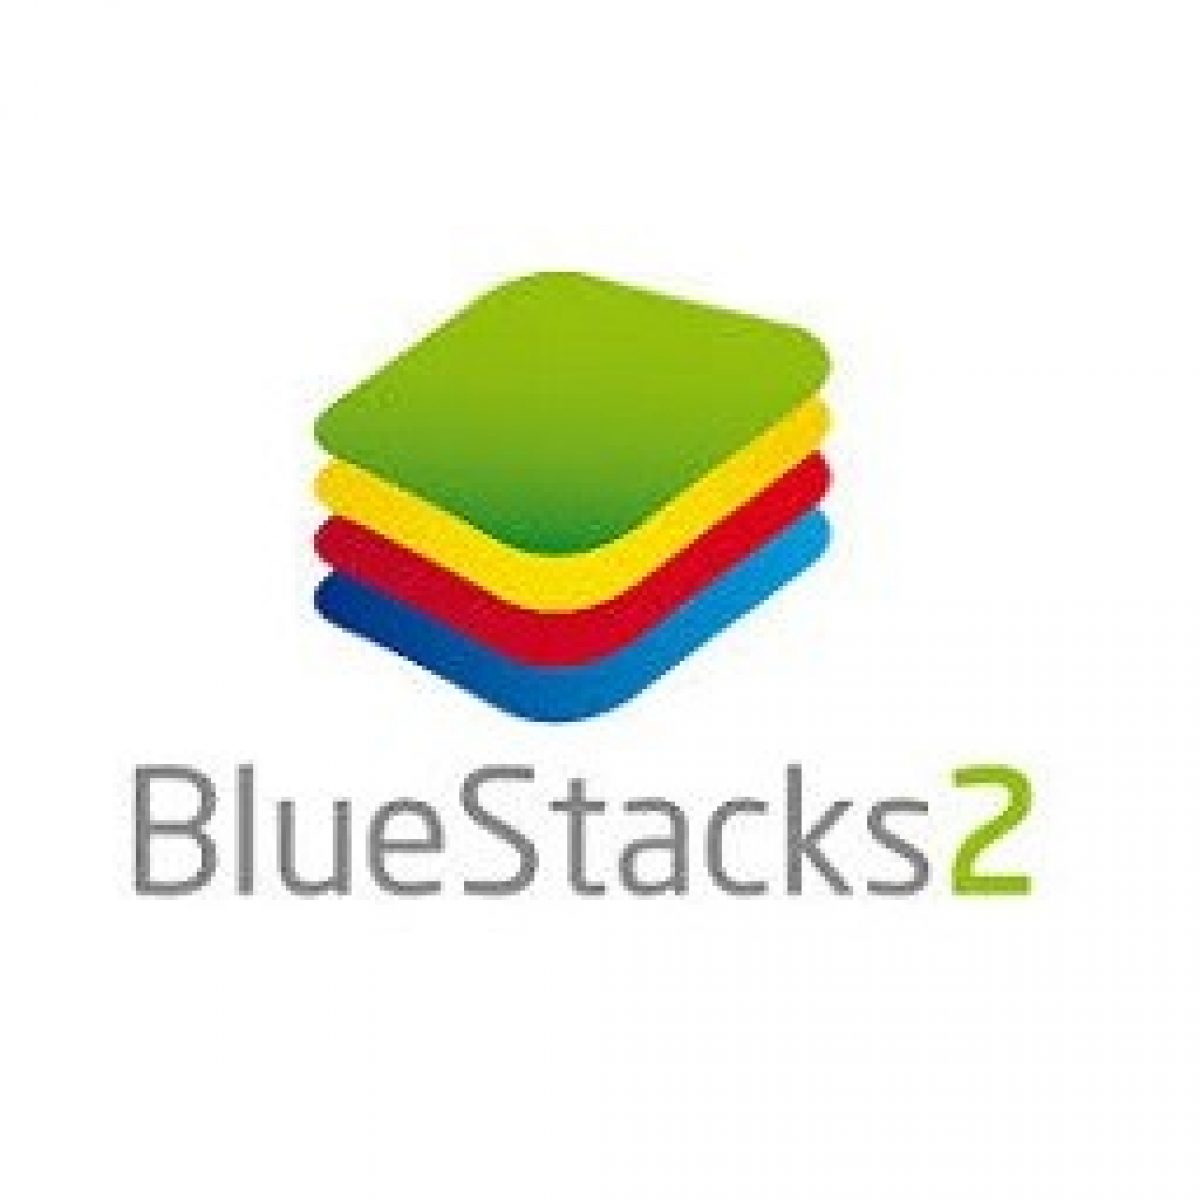 Bluestacks 2 android version